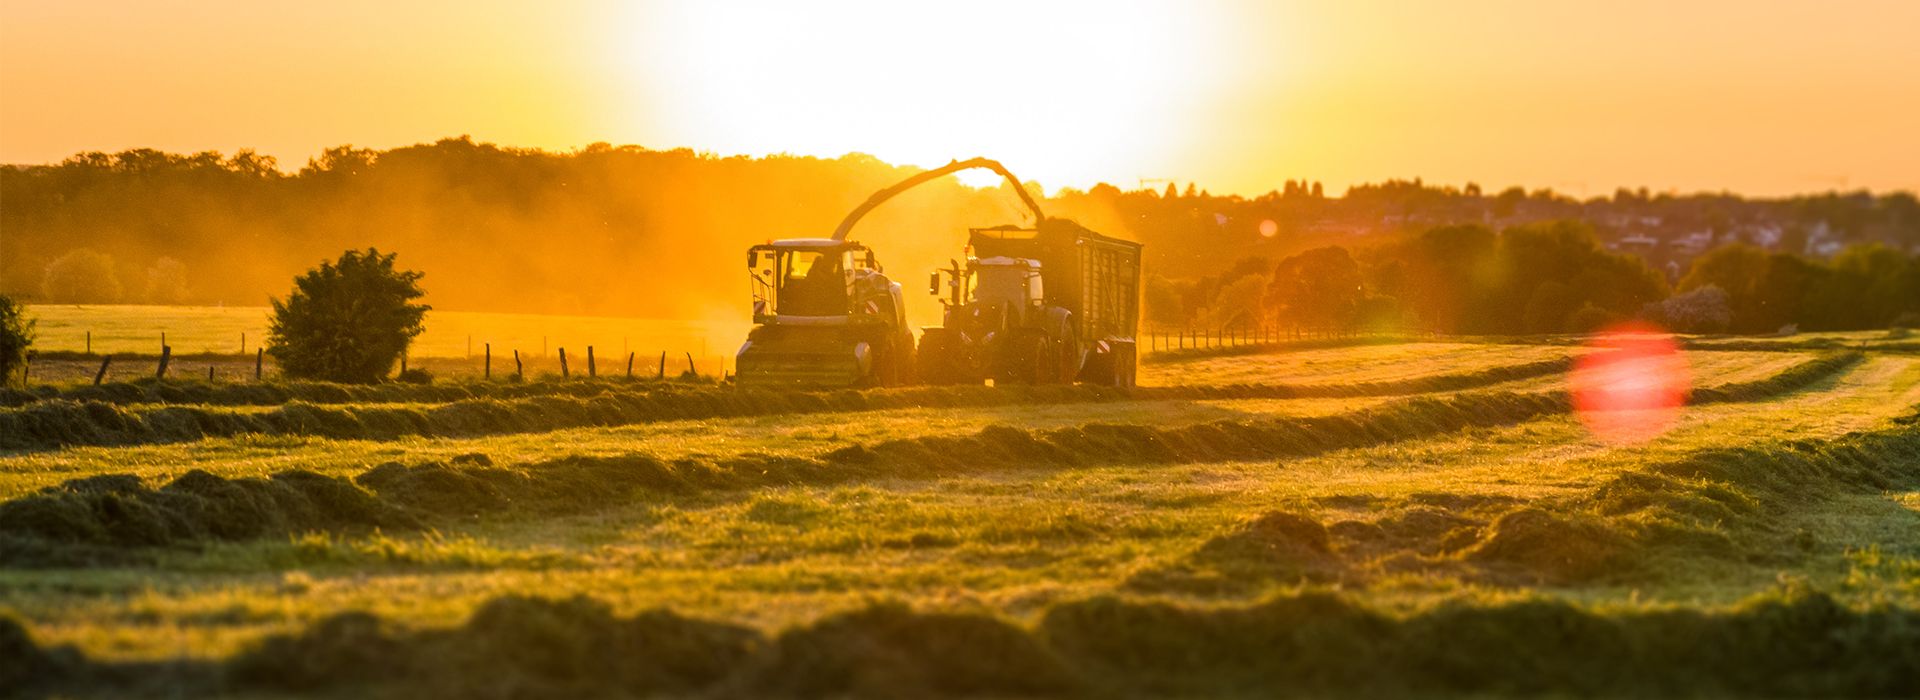 Landmaschinen auf Feld bei Sonnenuntergang